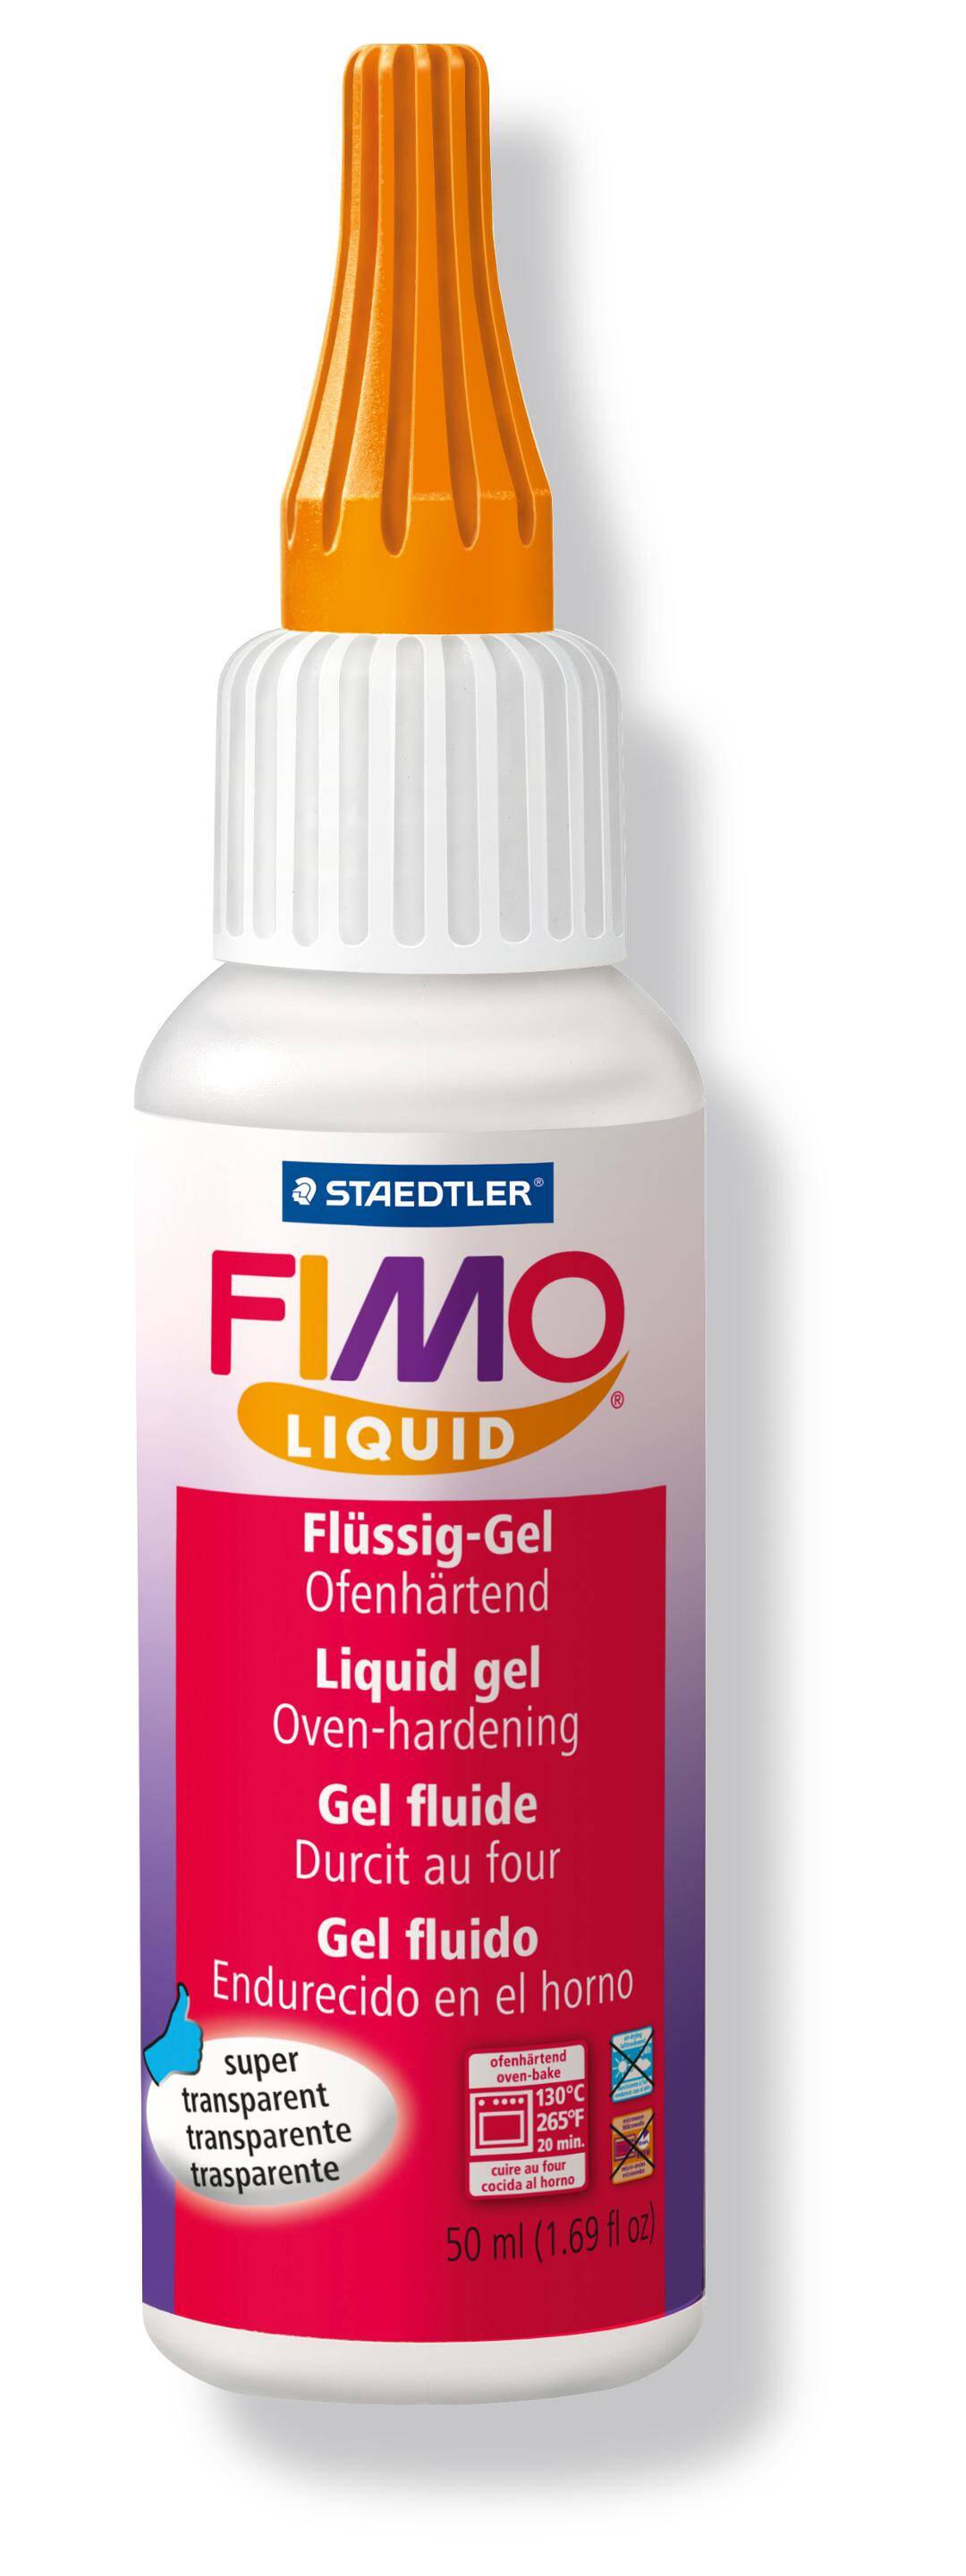 Fimo Liquid dekoratorski żel termoutwardzalny 50 ml Staedtler